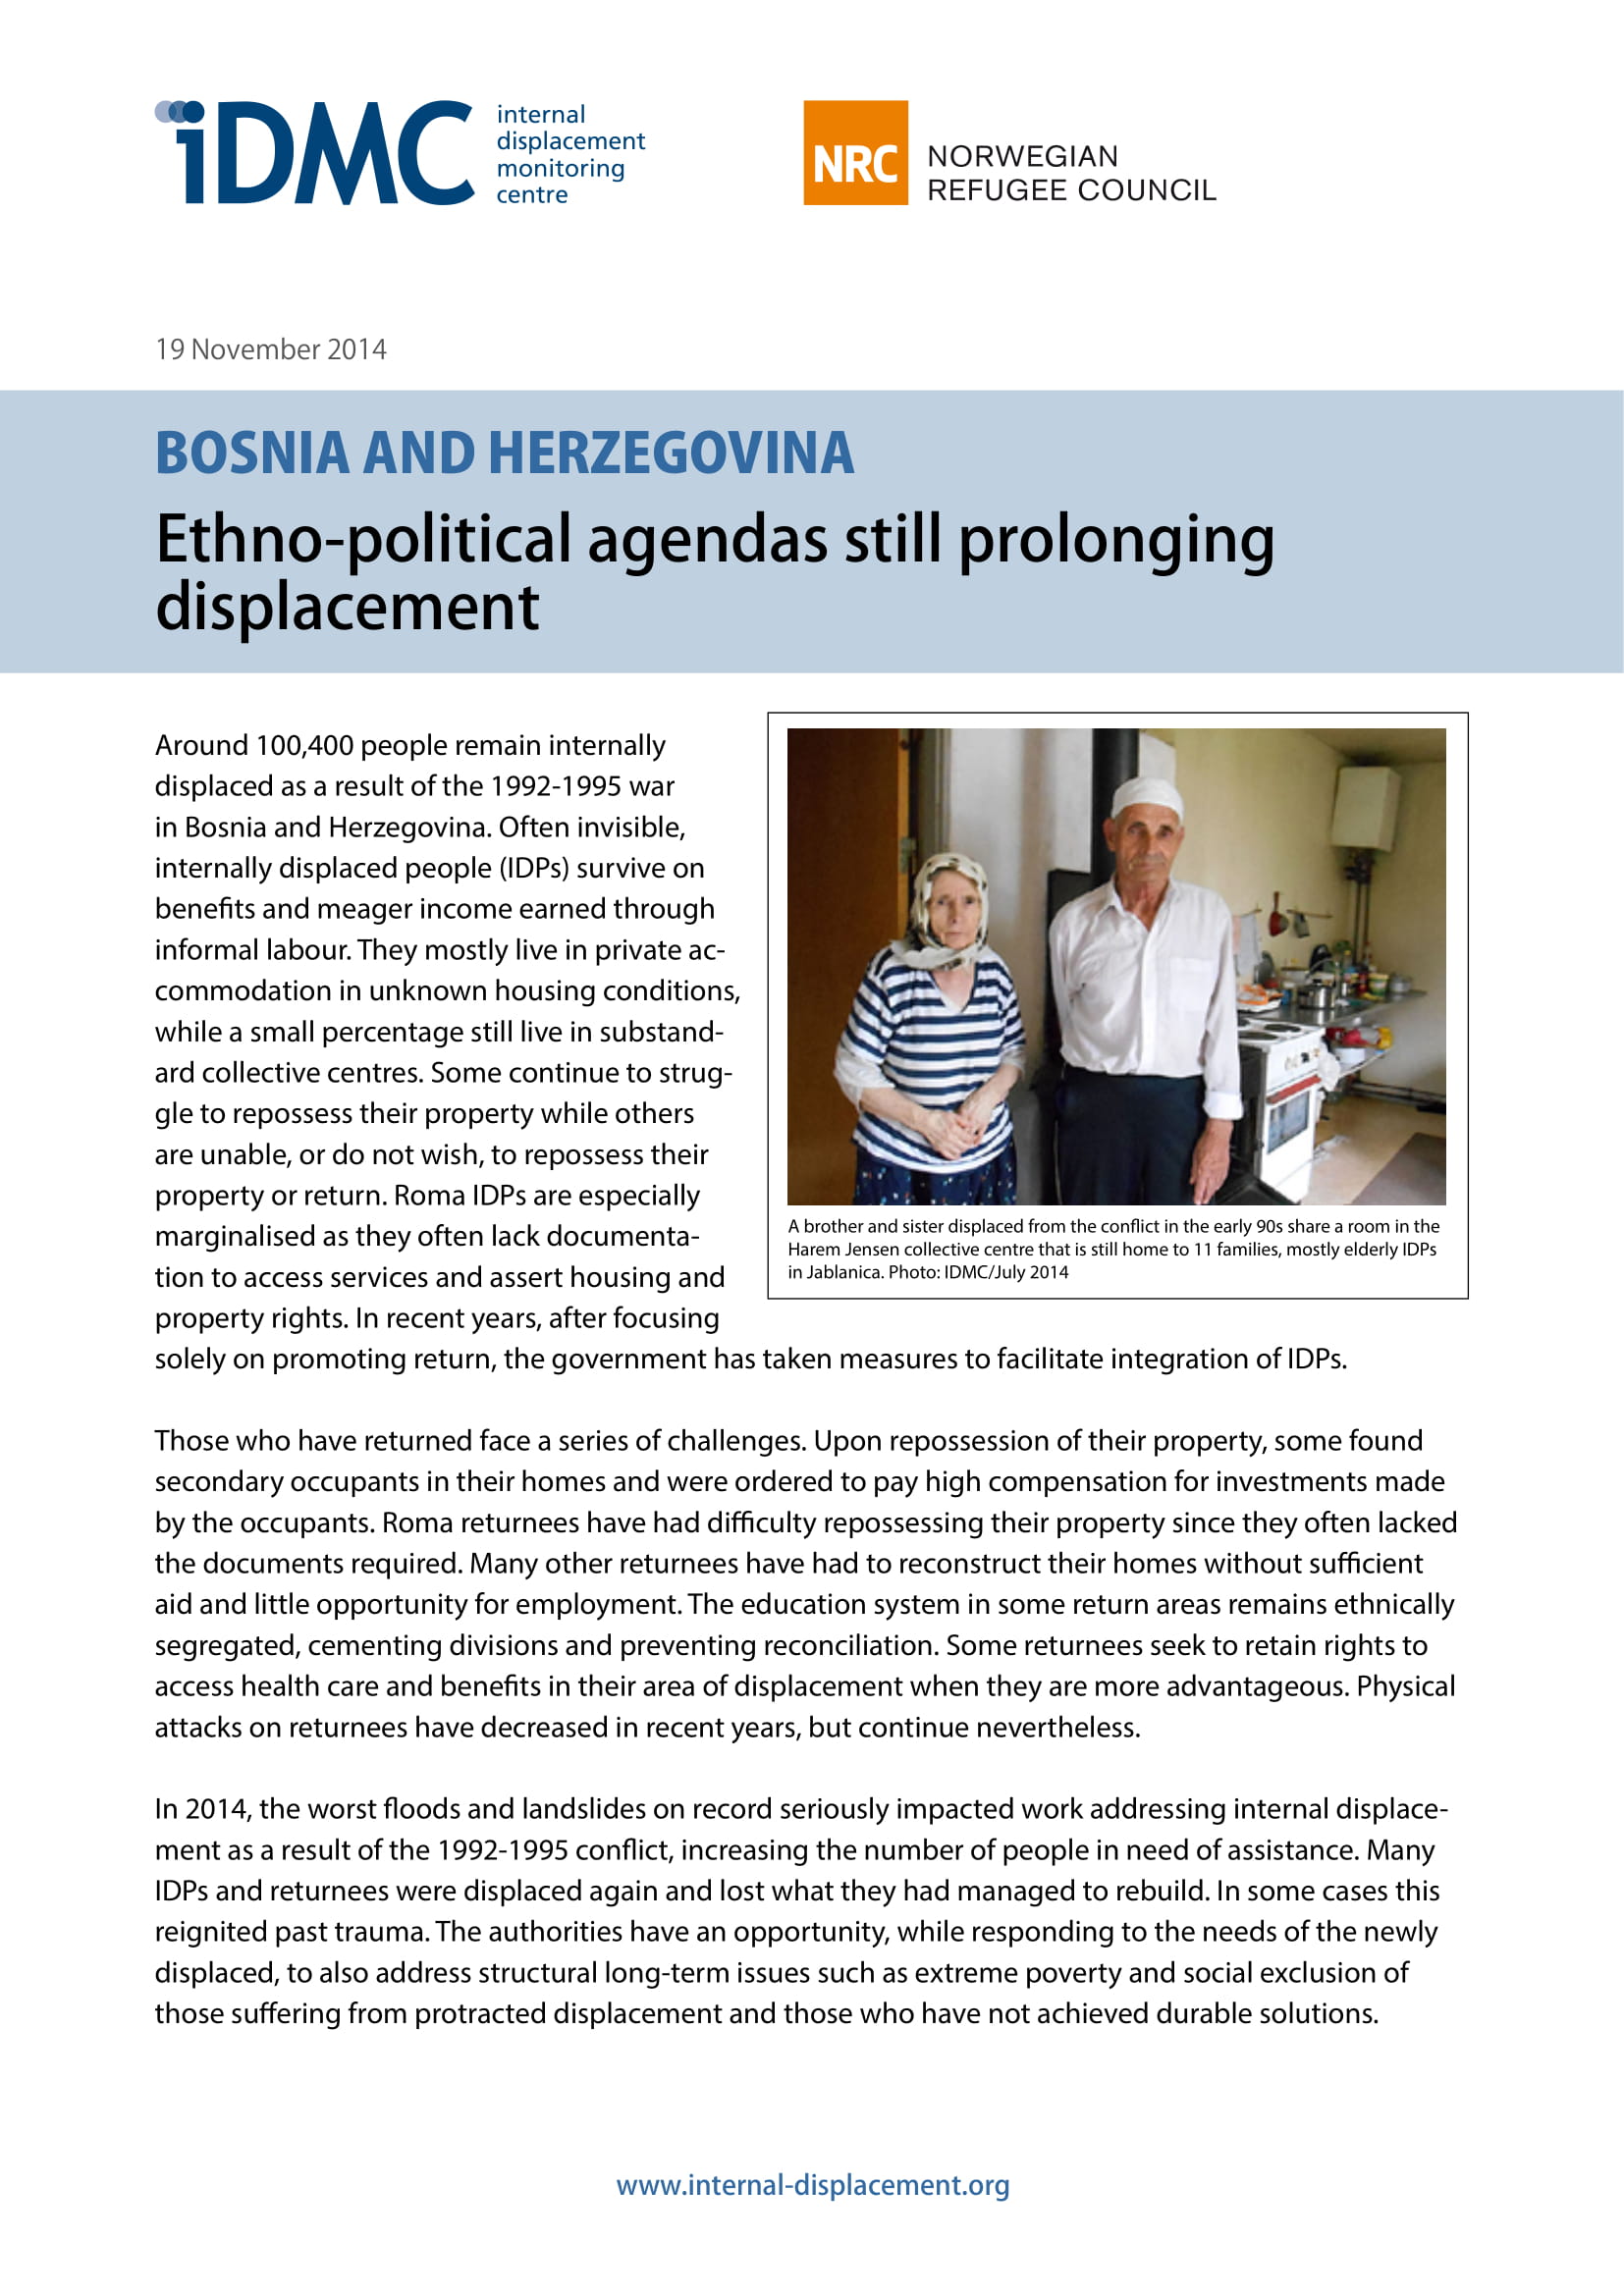 Bosnia and Herzegovina: Ethno-political agendas still prolonging displacement